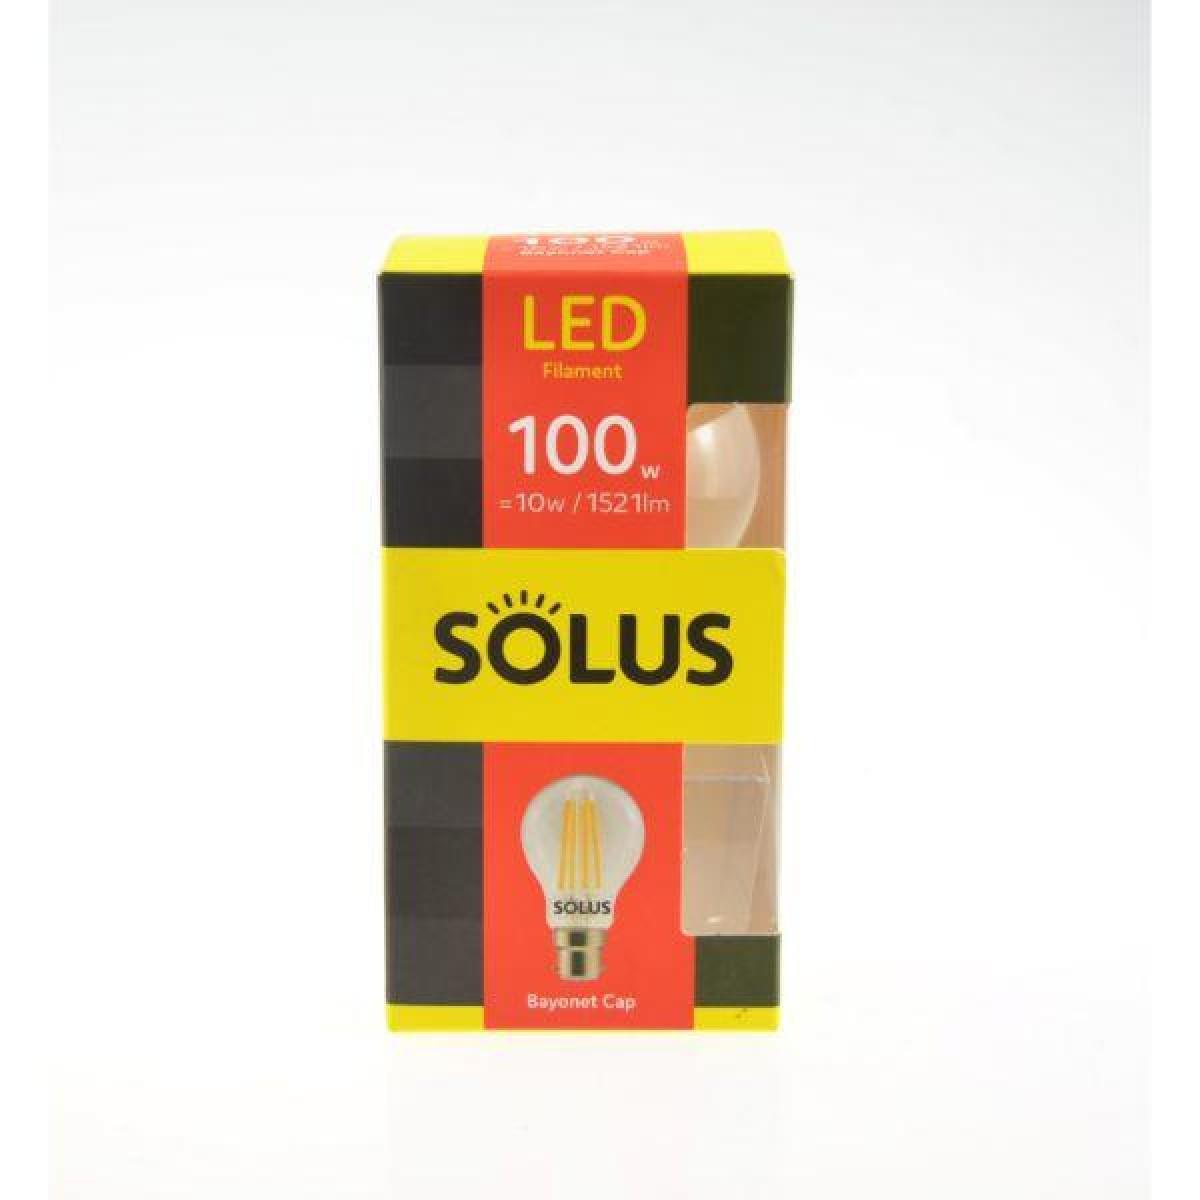 Solus LED Bulb 100W Non Dimm - bayonet cap